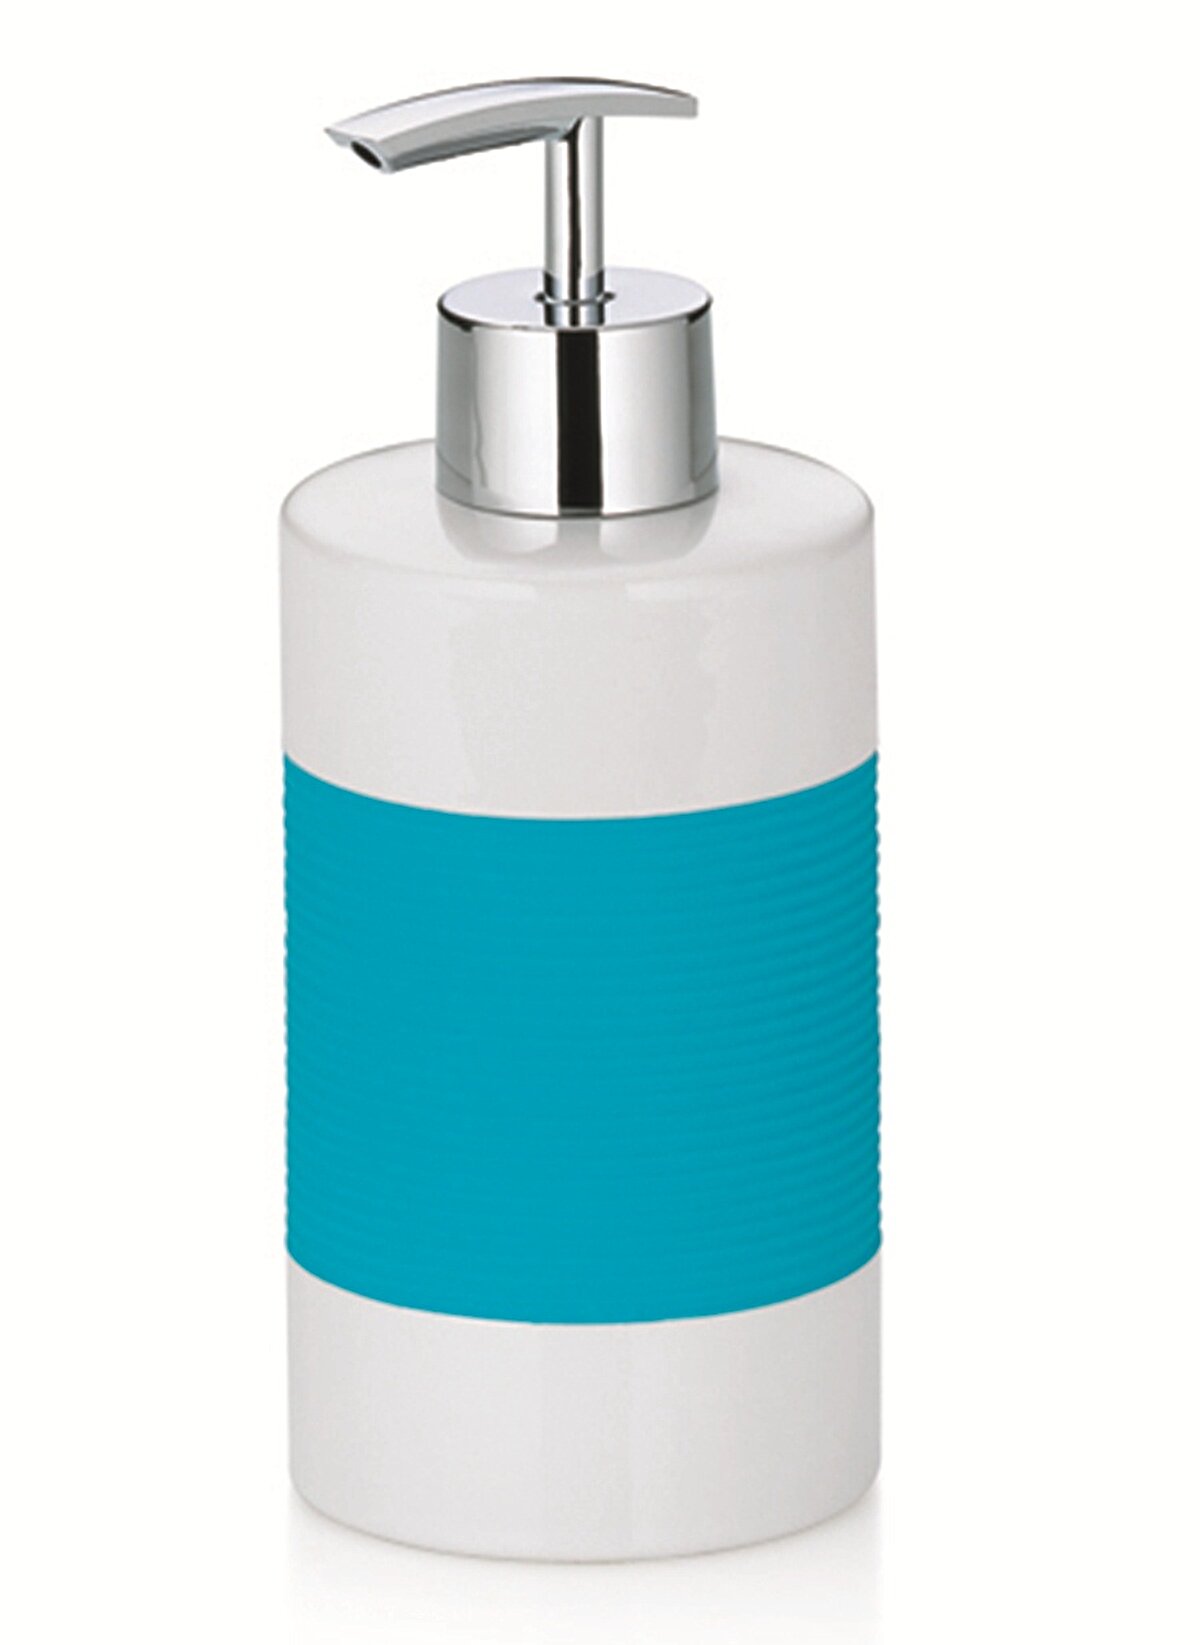 22567 Liquid soap dispenser Laletta turquoise Ceramic rubber groove decor white/turqoise 7cm Ø, 17c